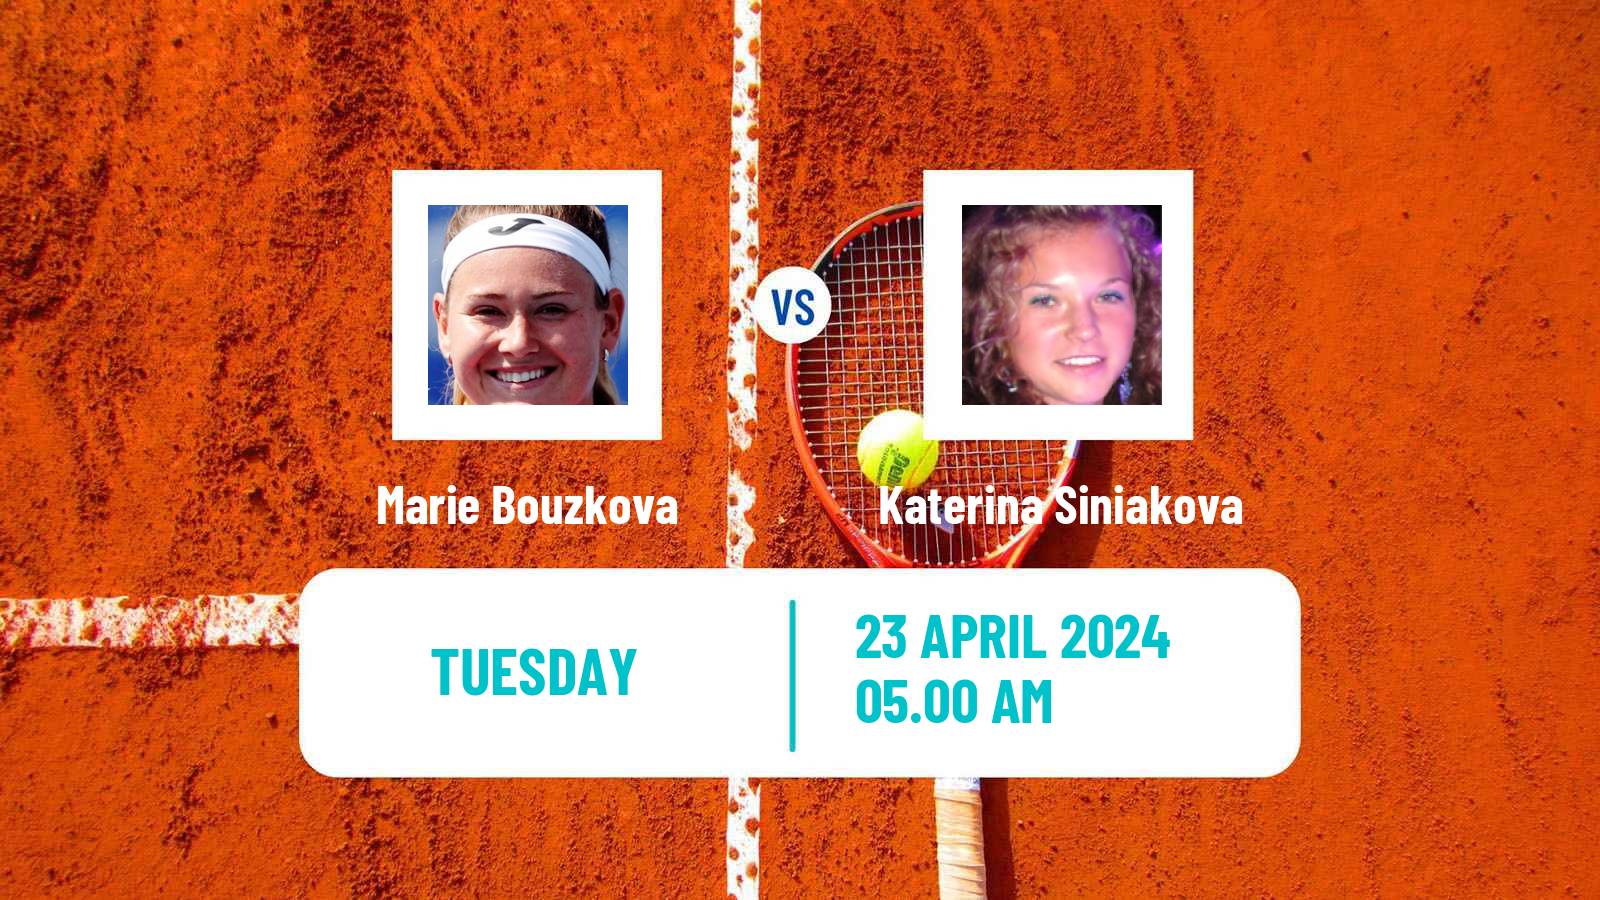 Tennis WTA Madrid Marie Bouzkova - Katerina Siniakova